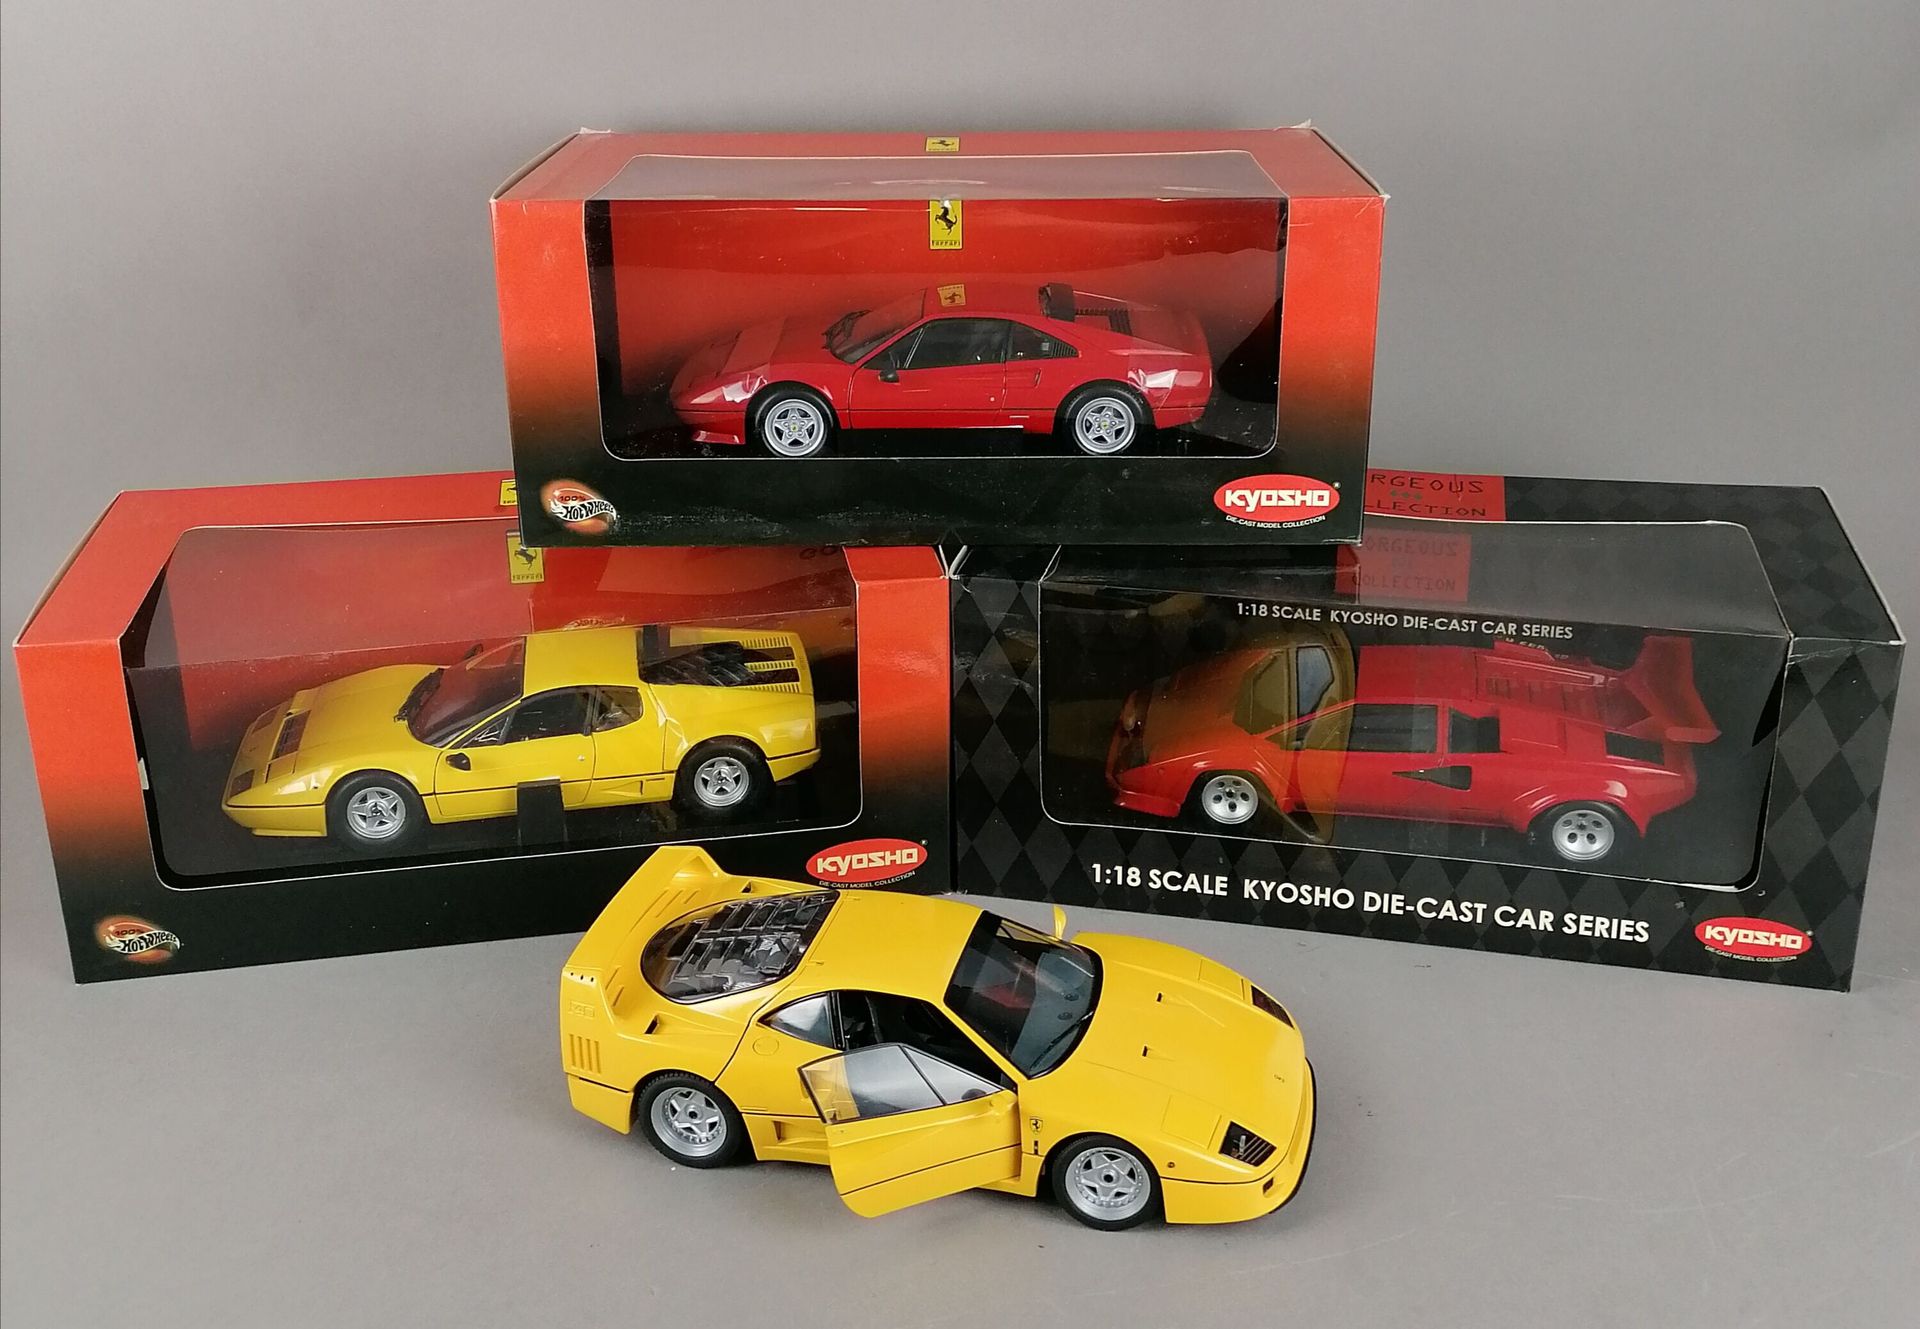 Null KYOSHO - QUATTRO AUTO in scala 1/18:

1x Ferrari F40 giallo senza scatola

&hellip;